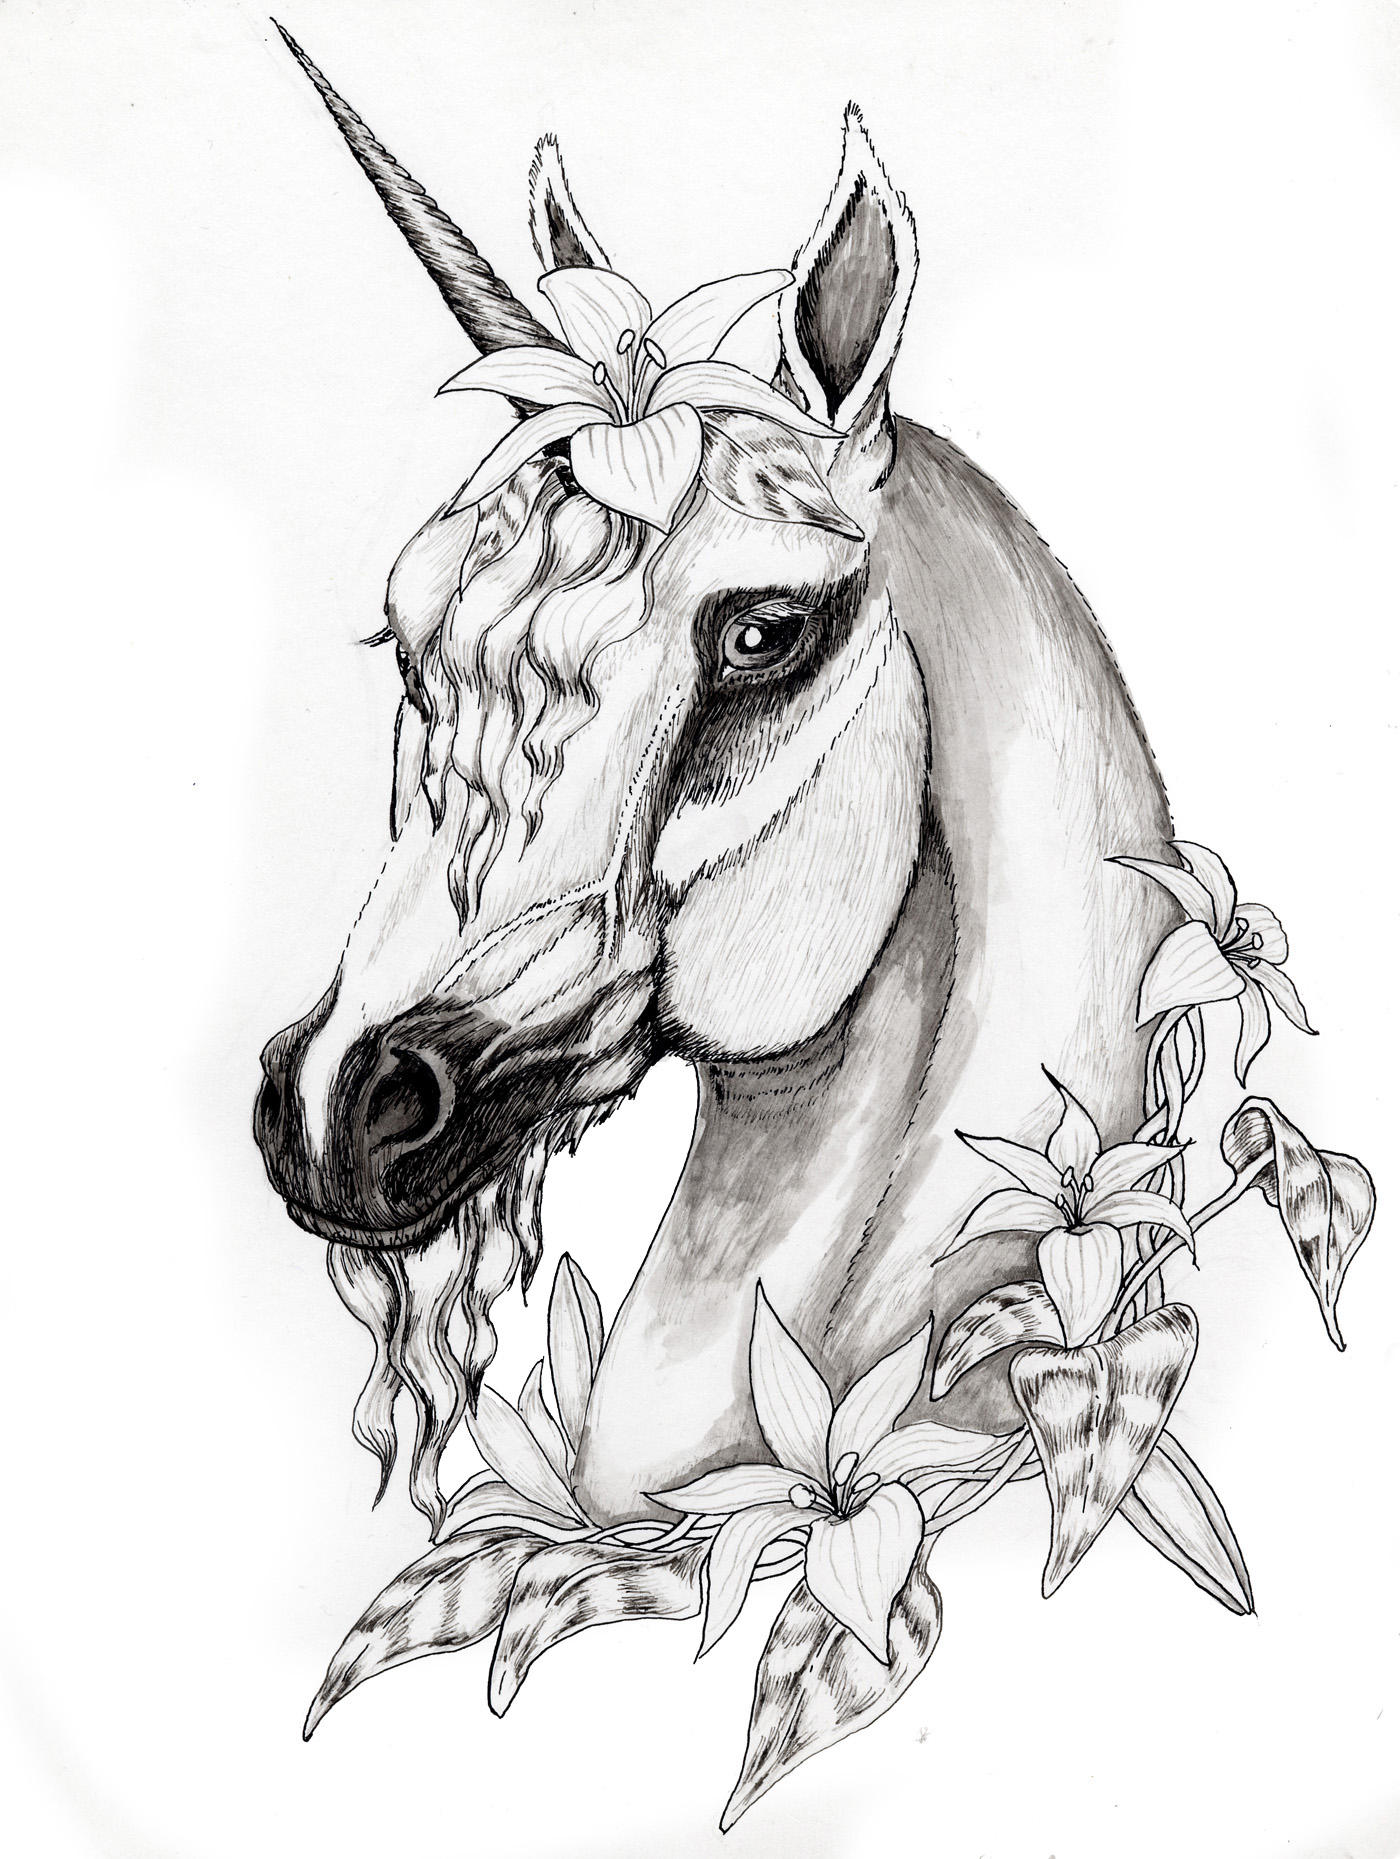 Flowered Unicorn by SpottedPegasus on DeviantArt